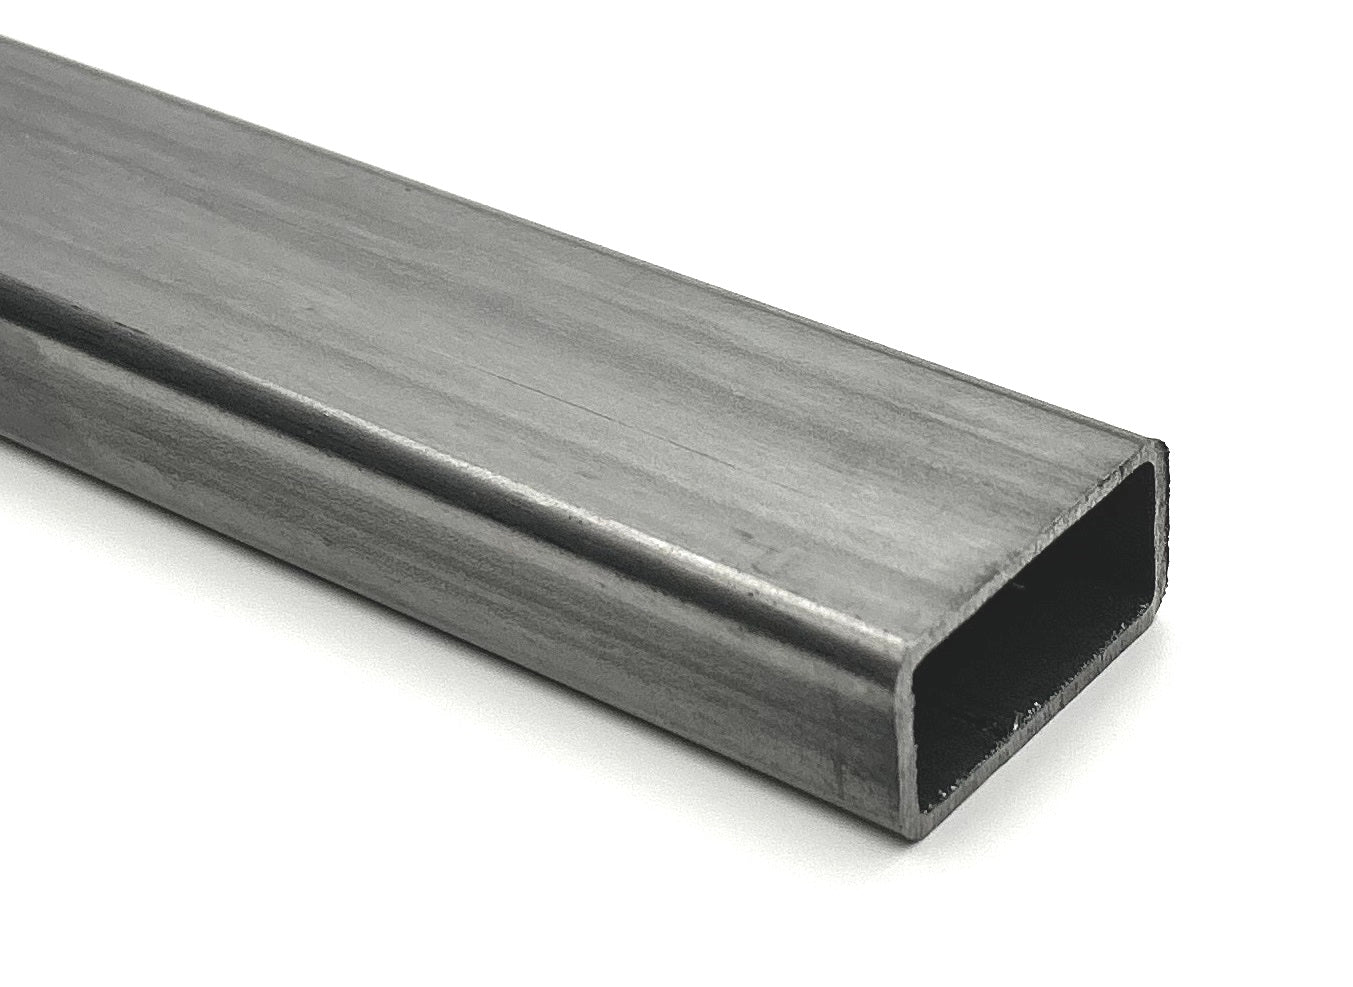 Sort stål - Rektangulært rør 100x60mm